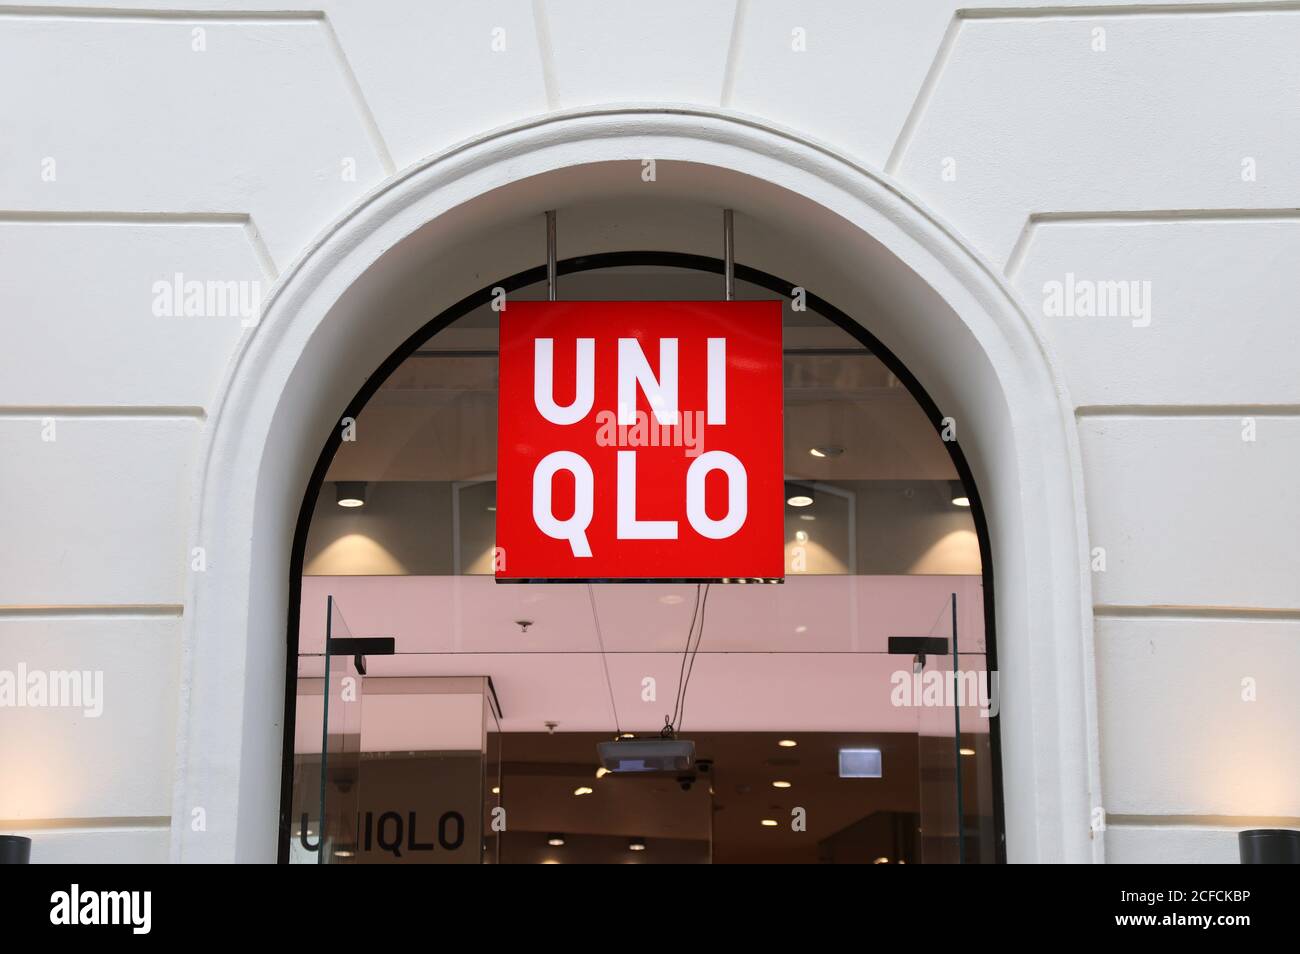 Uniqlo Store Fotos e Imágenes de stock - Alamy